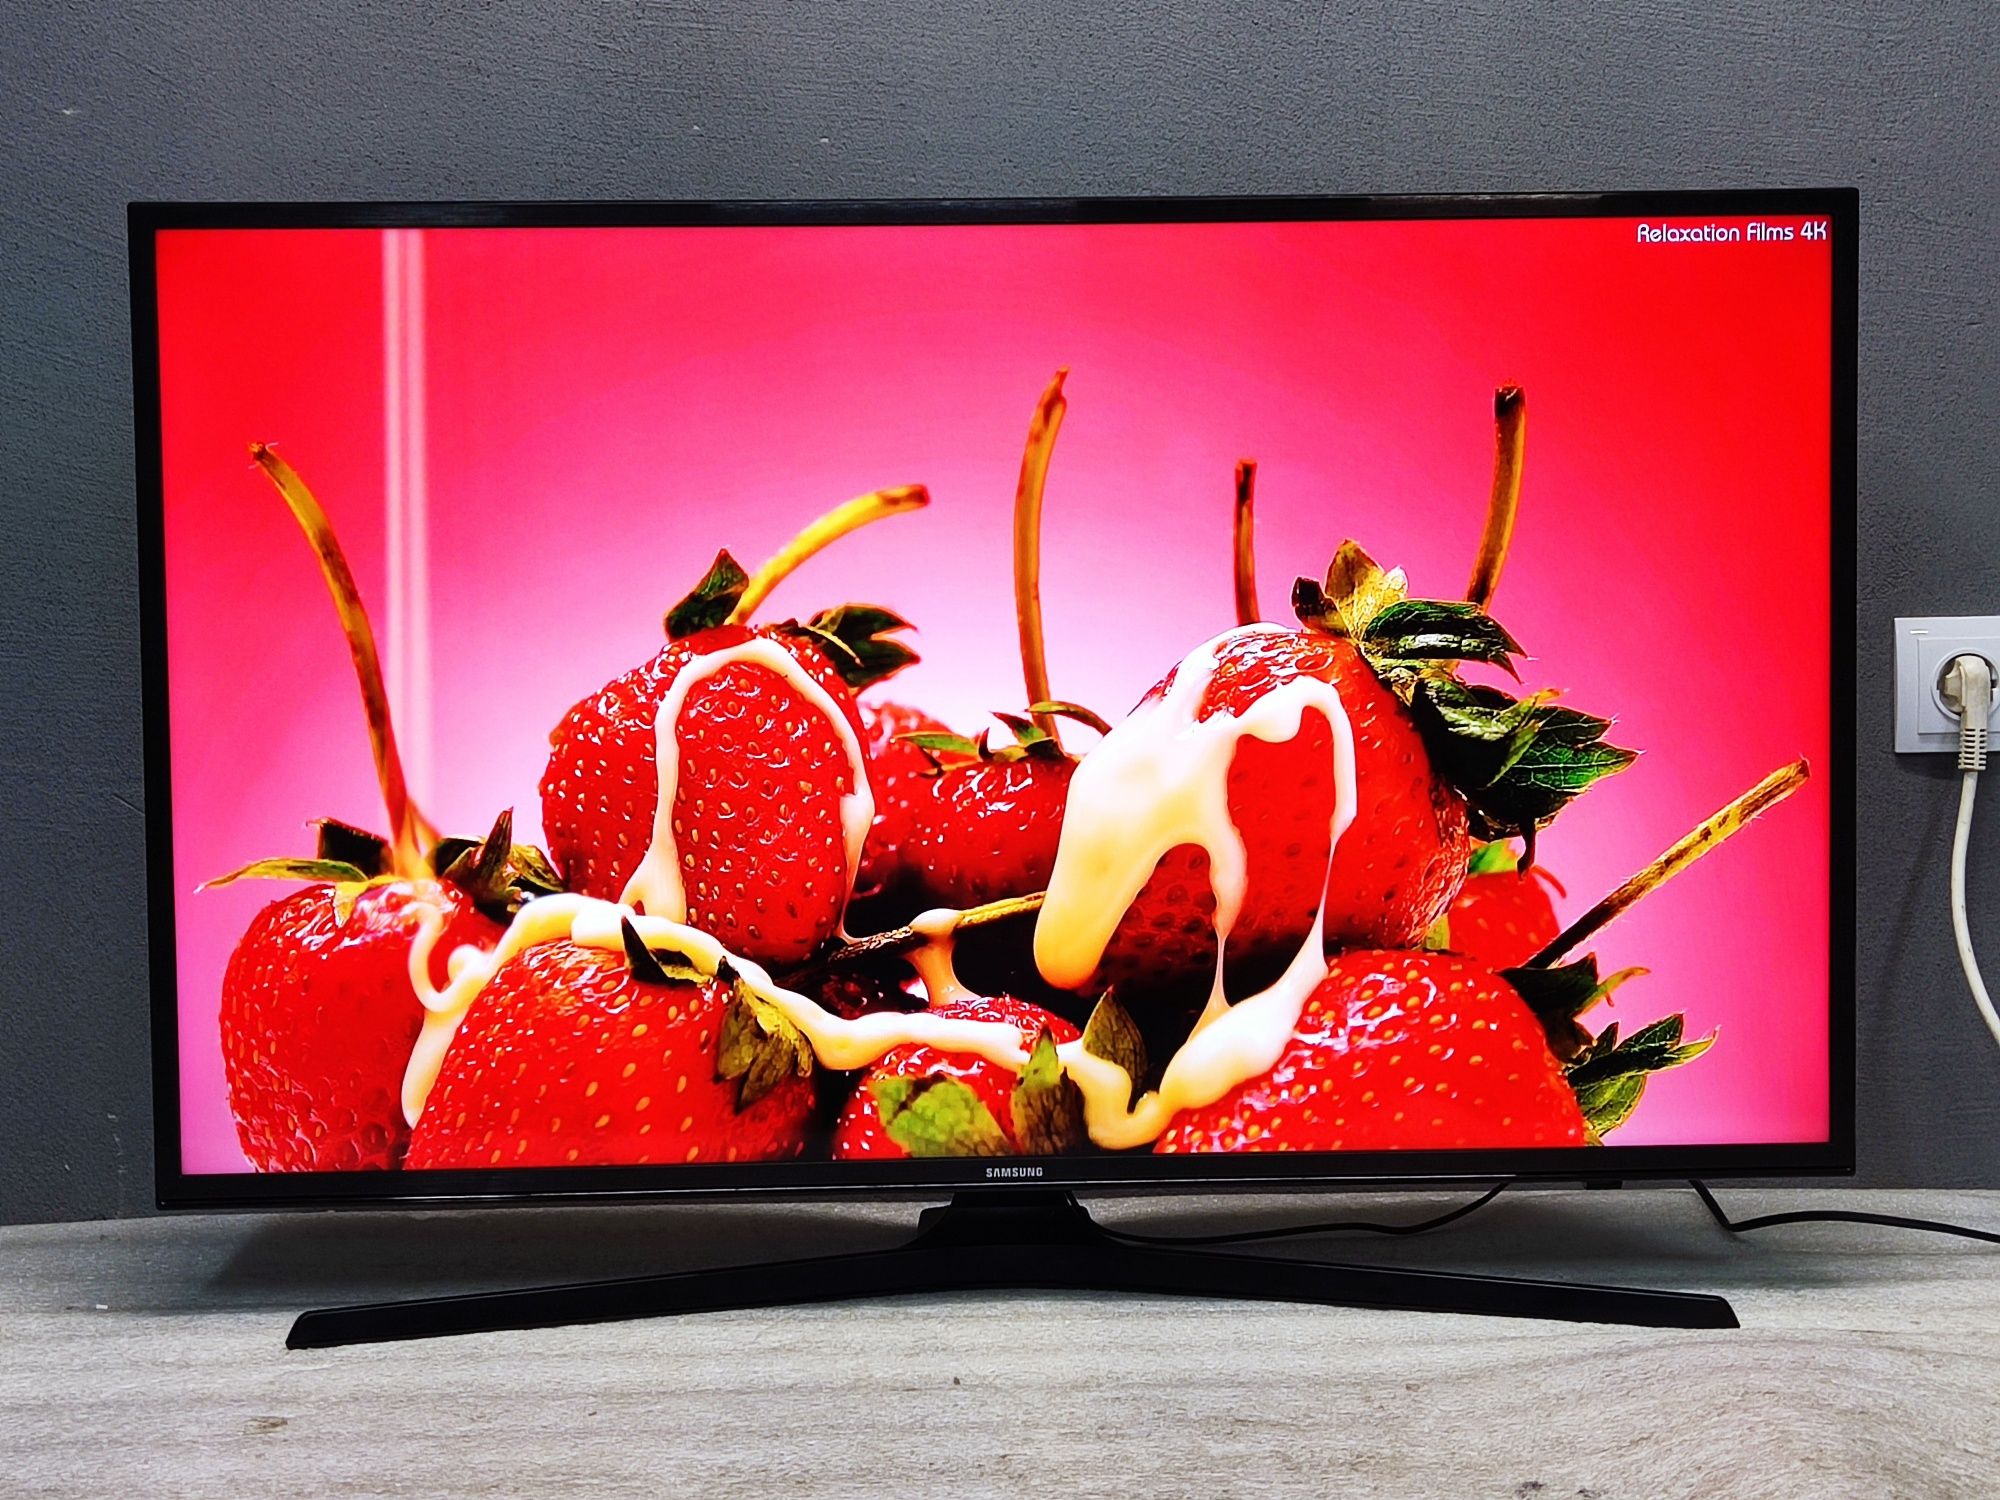 Samsung UE40KU6099 (40") 4K Ultra HD Smart TV Wi-Fi